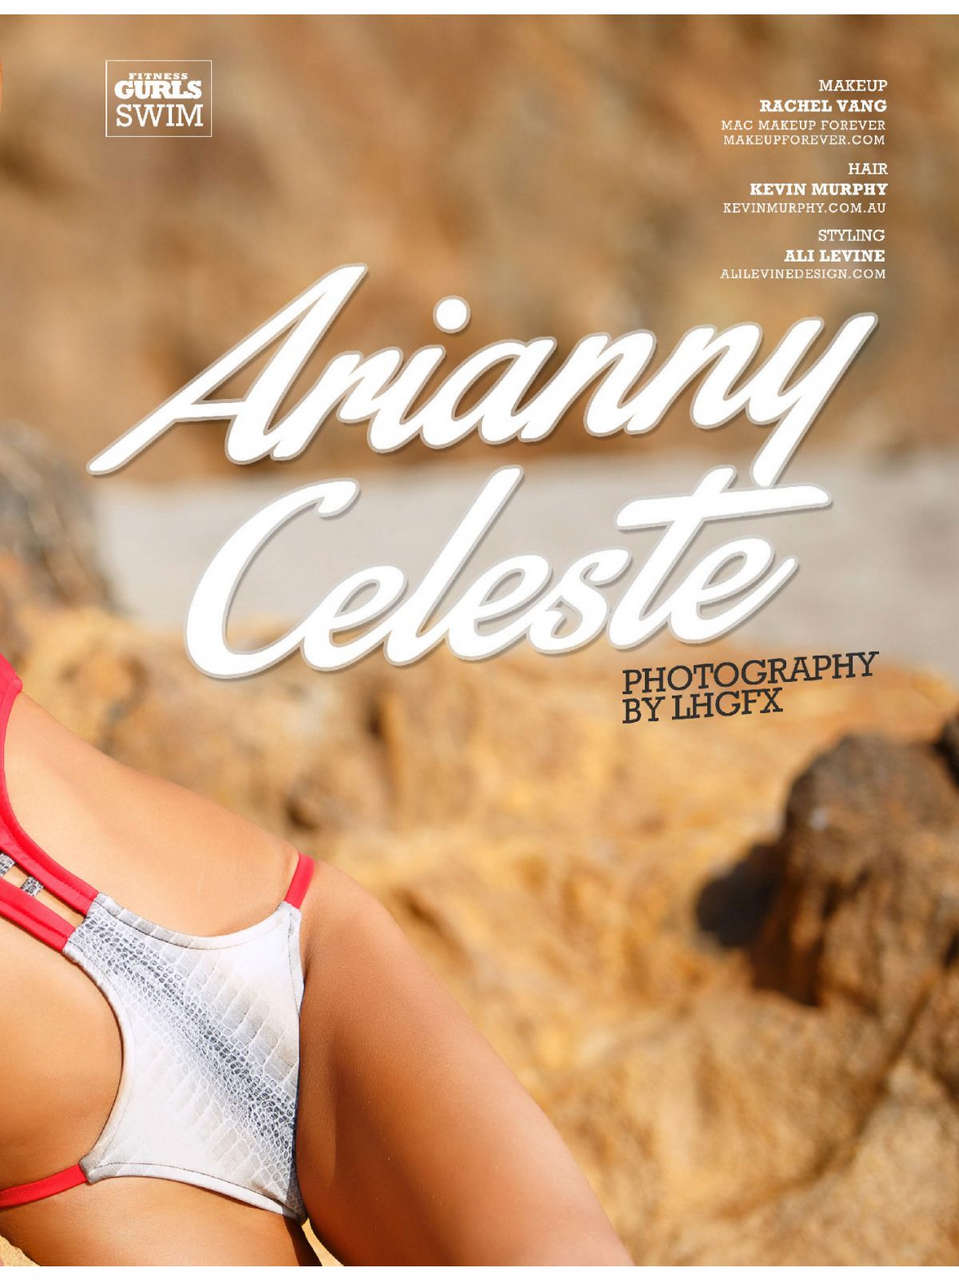 Arianny Celeste Fitness Gurls Magazine July 2014 Issue